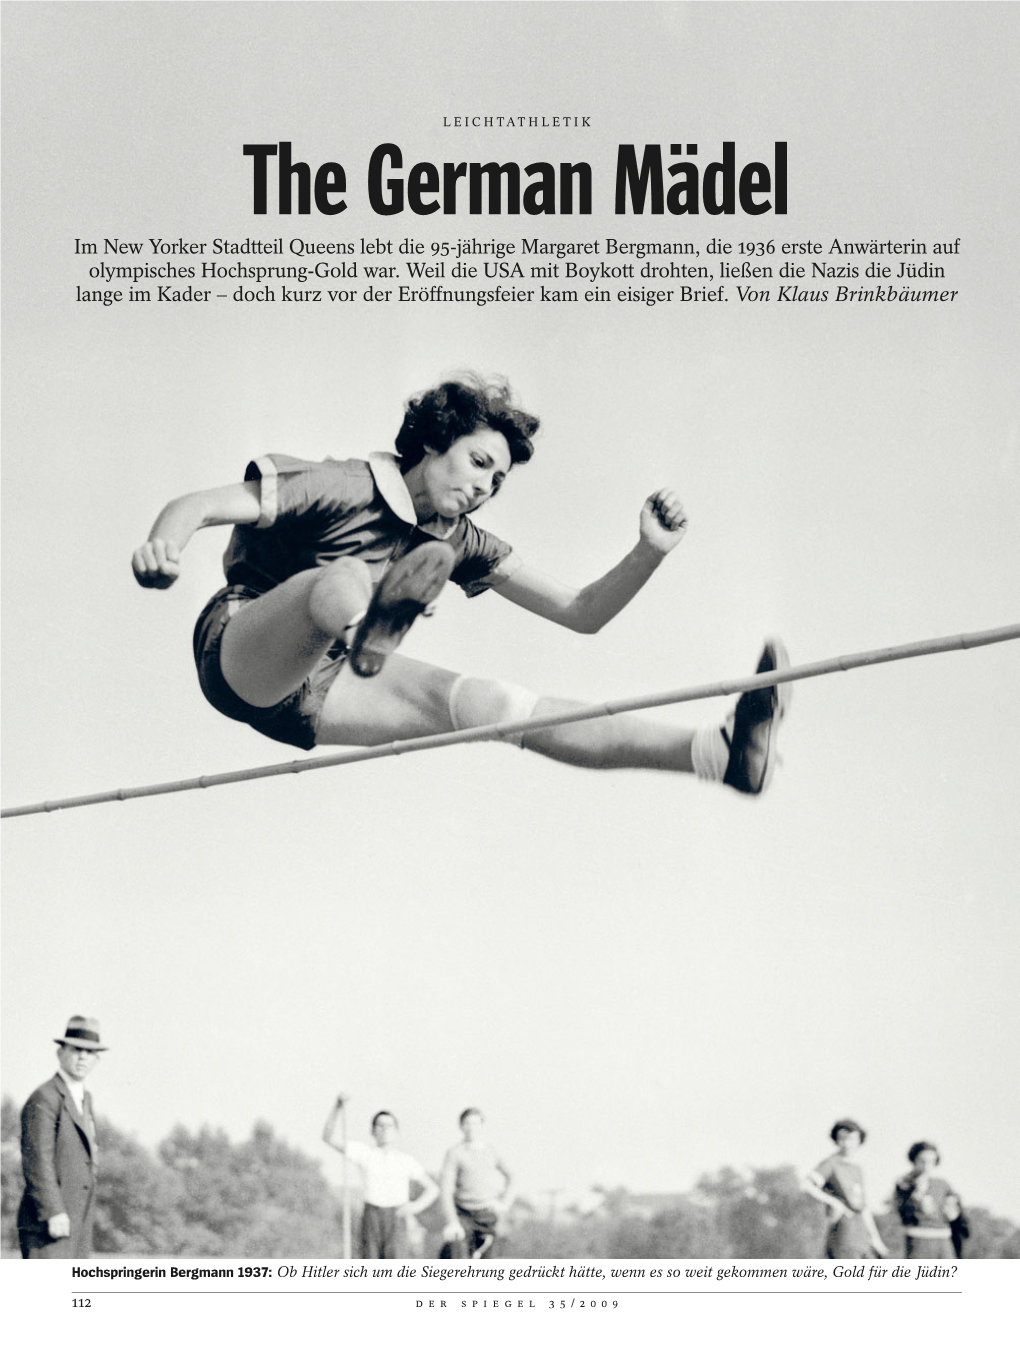 The German Mädel“